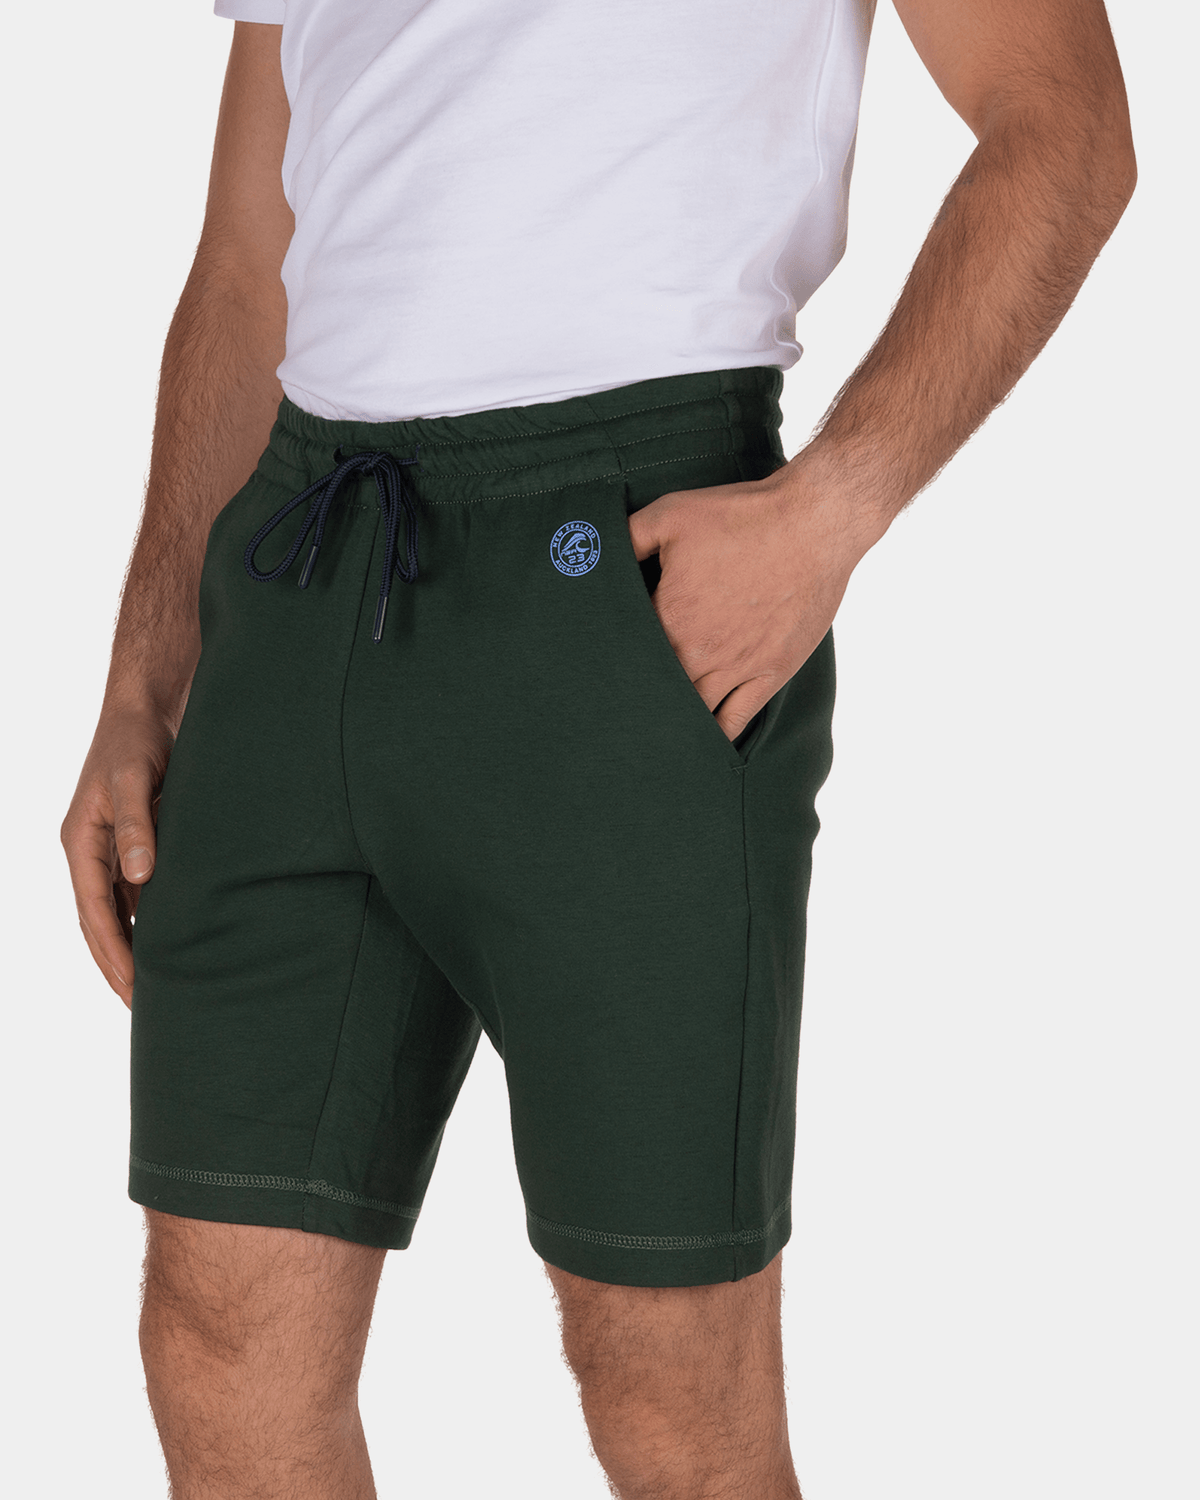 Double Jogg short jogging pants - Duck Green